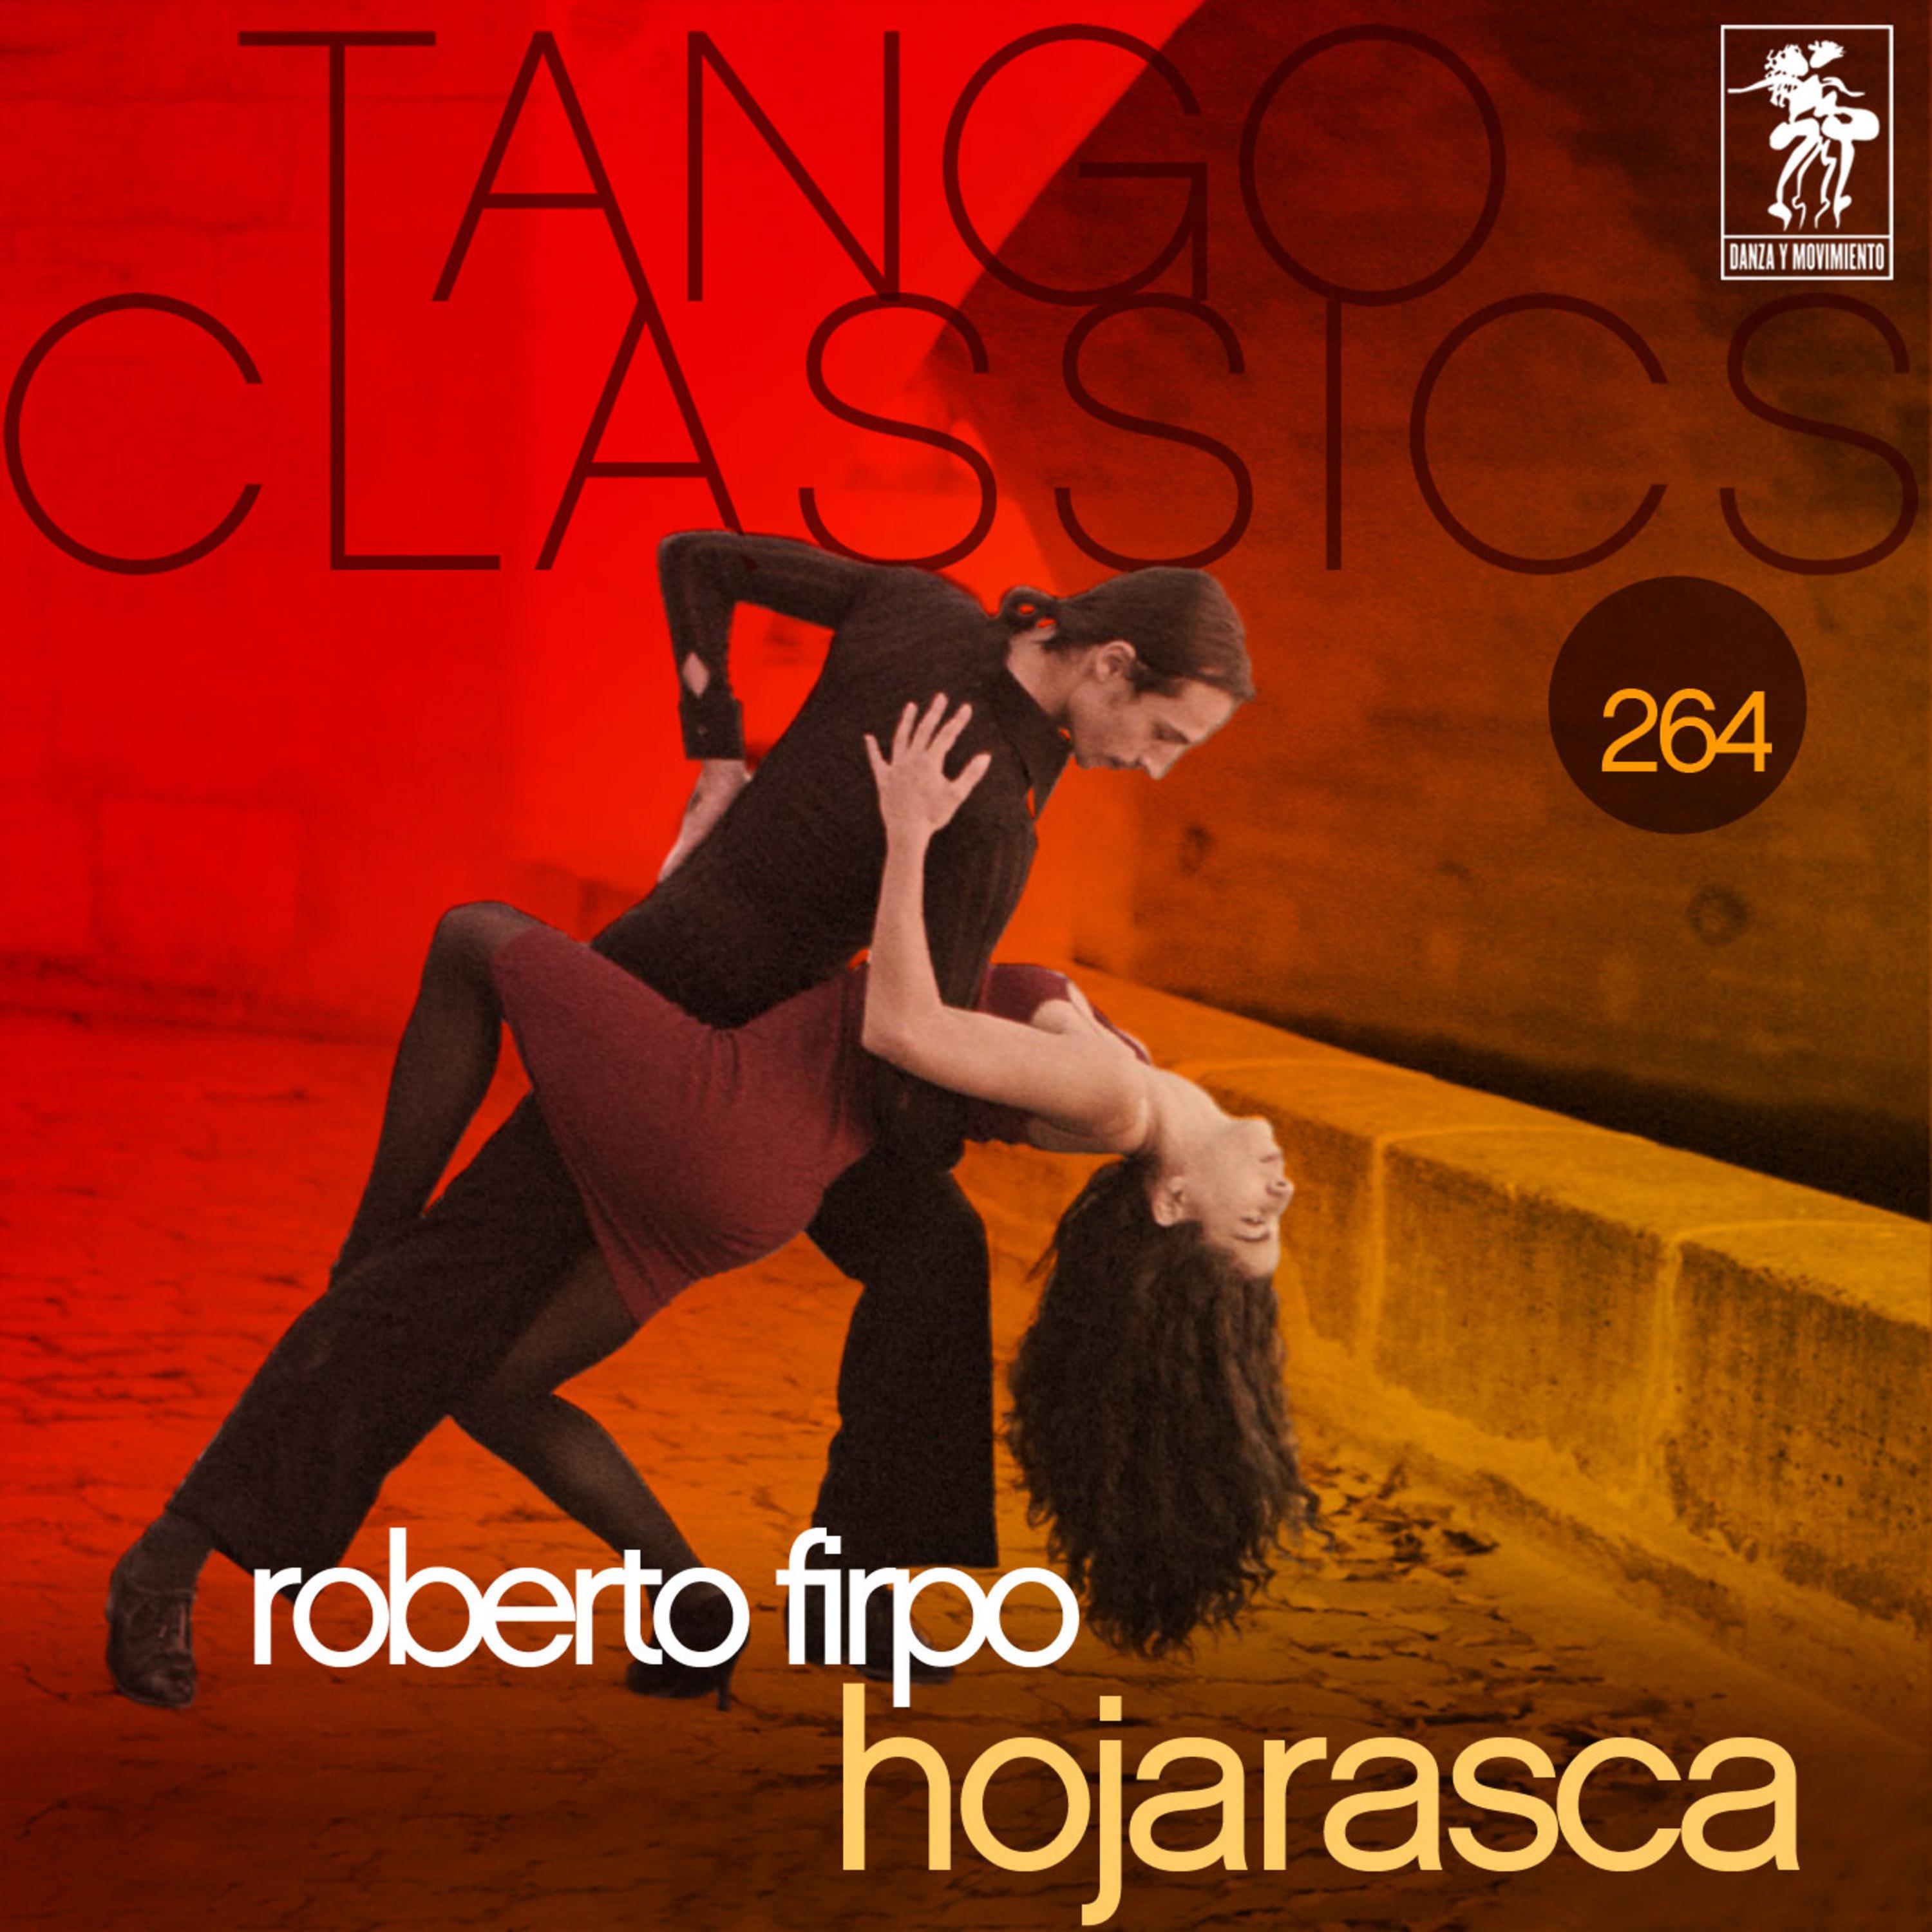 Tango Classics 264: Hojarasca